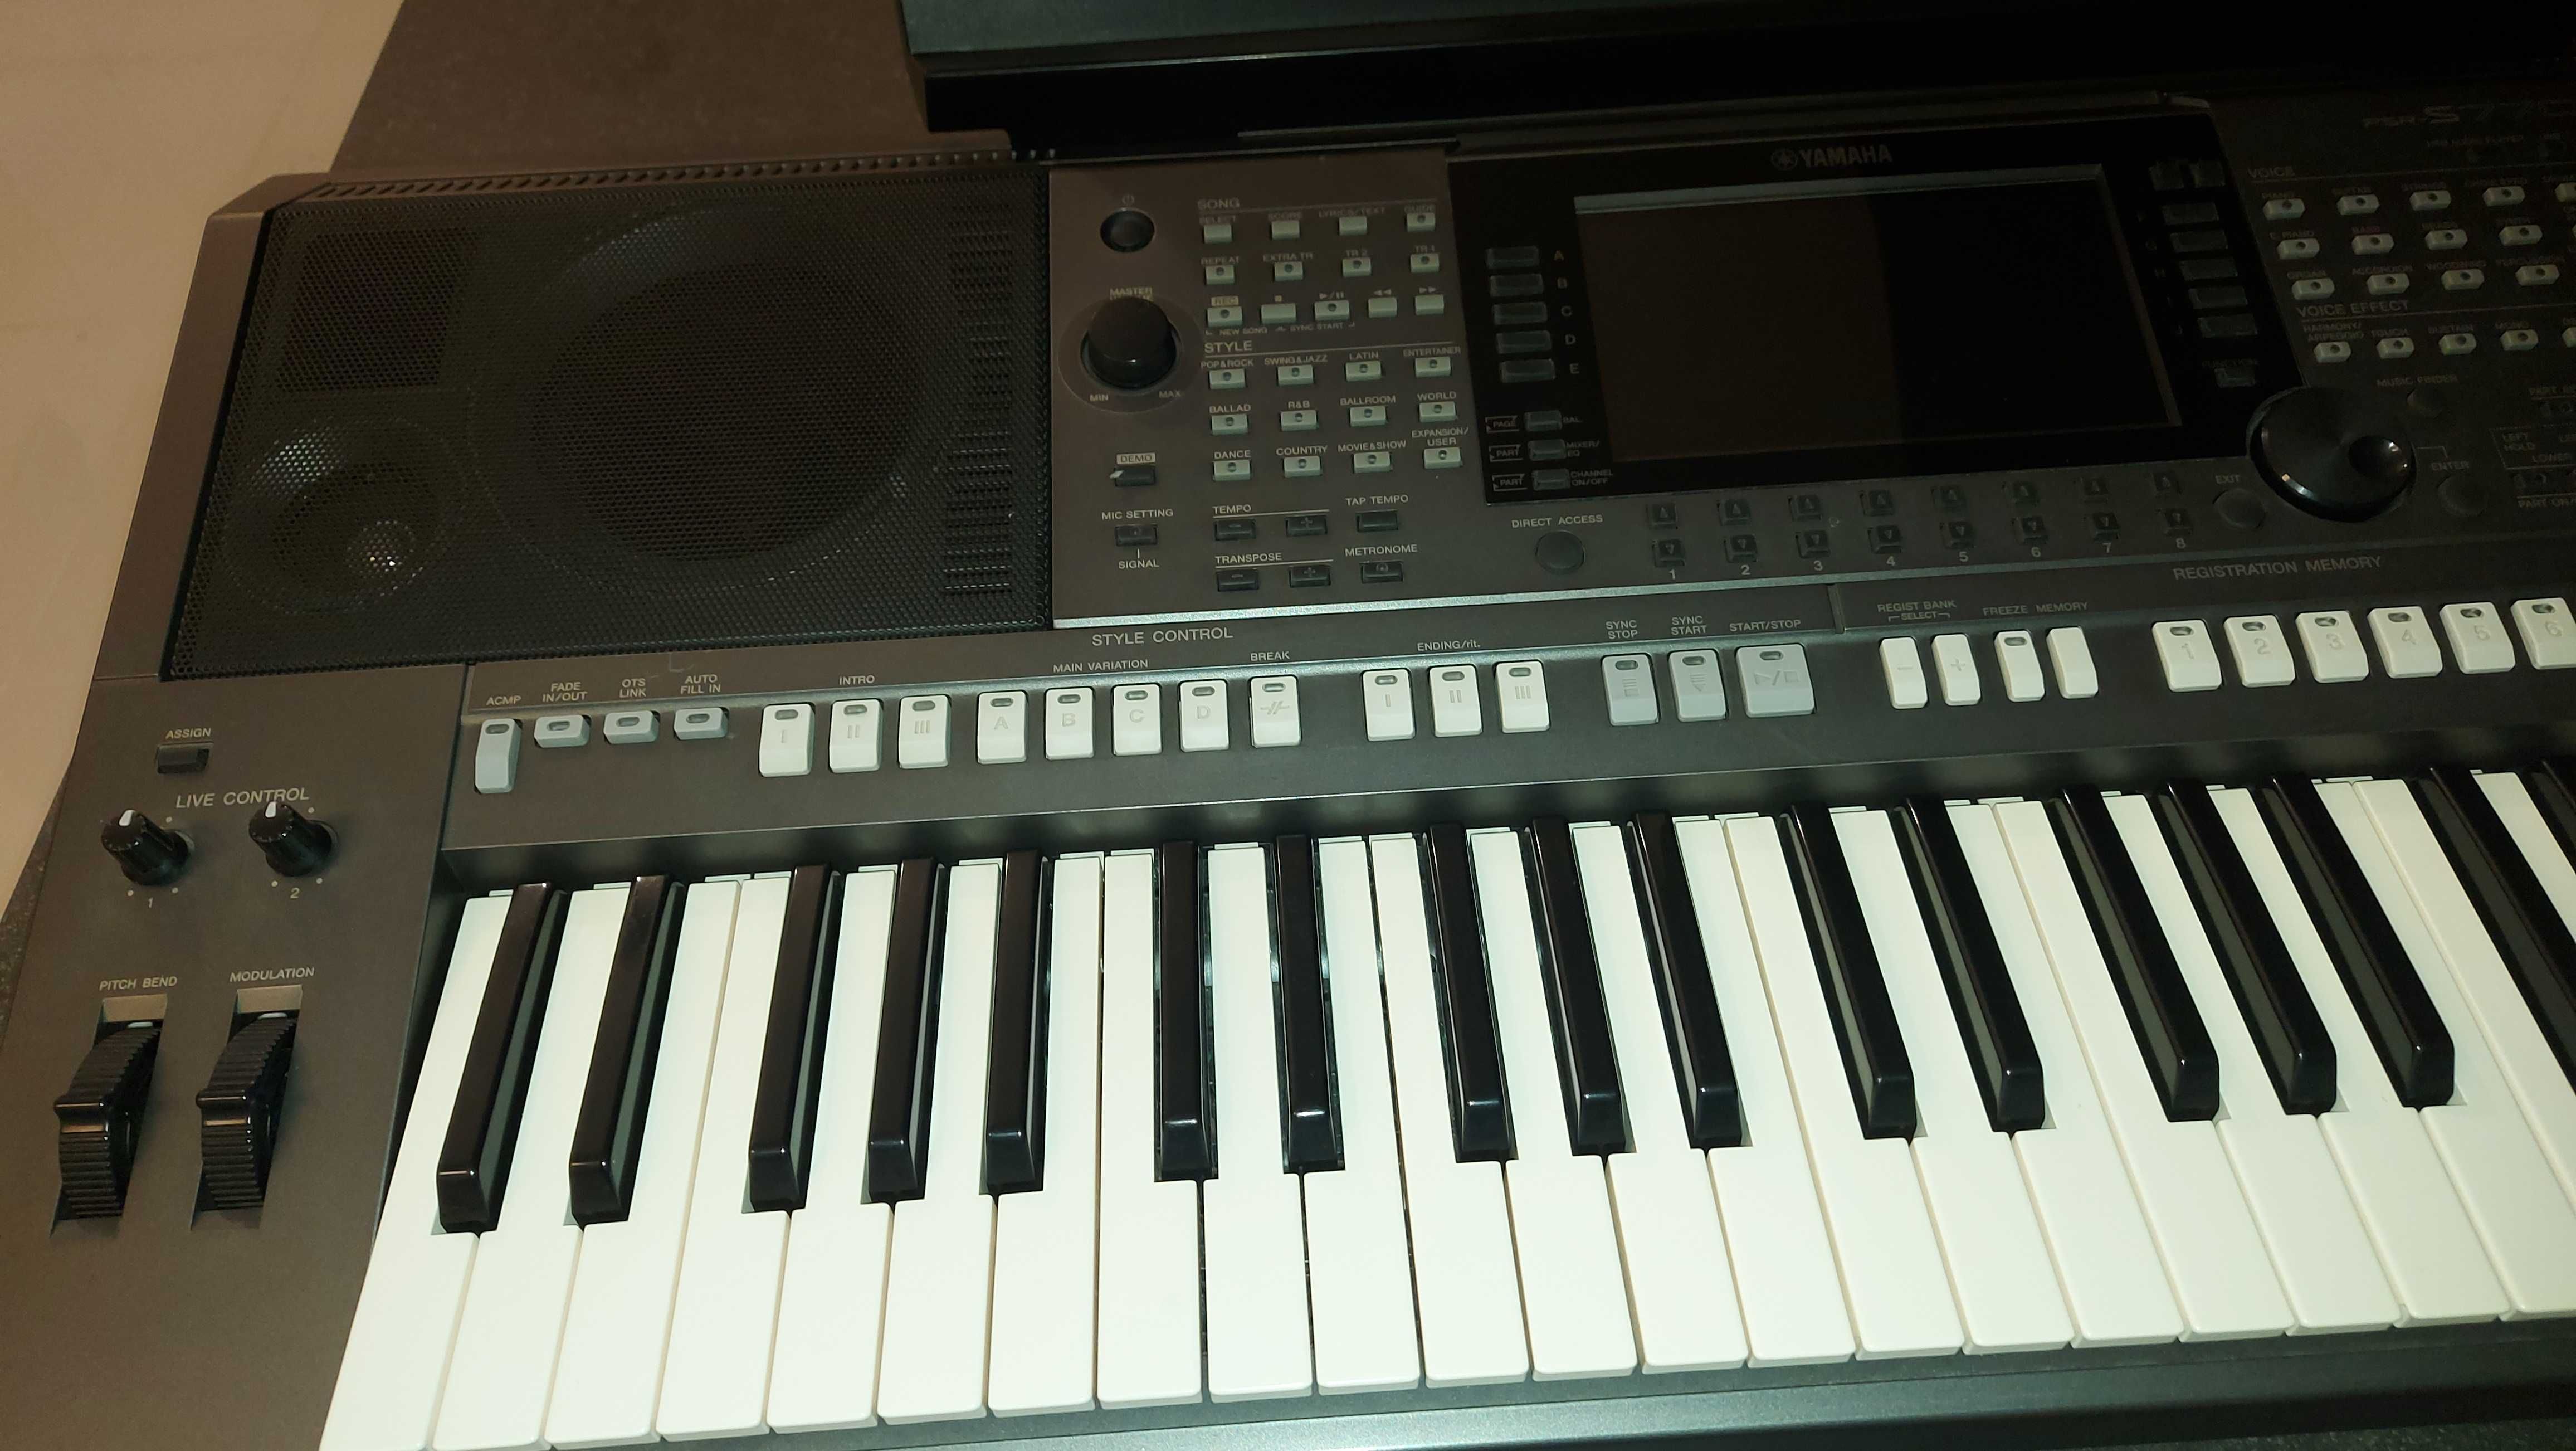 Sprzedam Keyboard Yamaha PSR-S 770